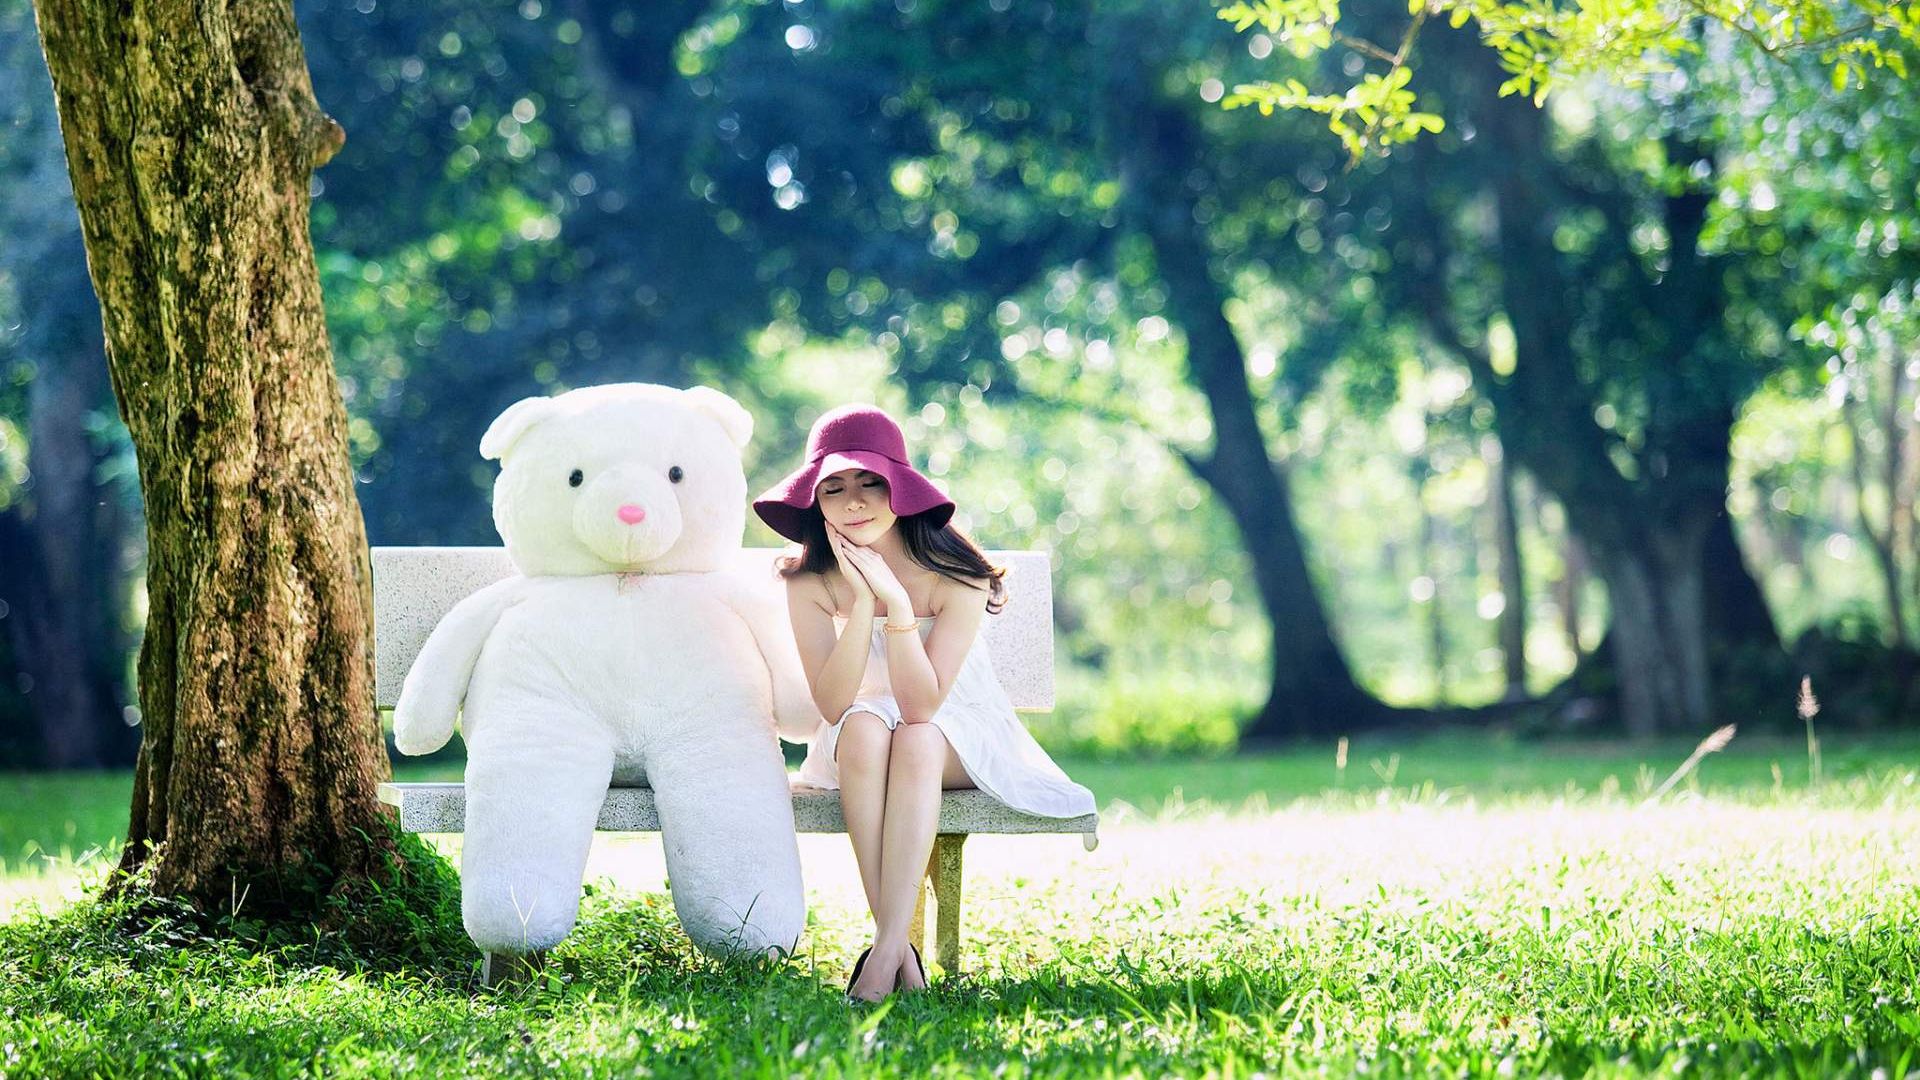 Wallpaper Large teddy bear and cute girl